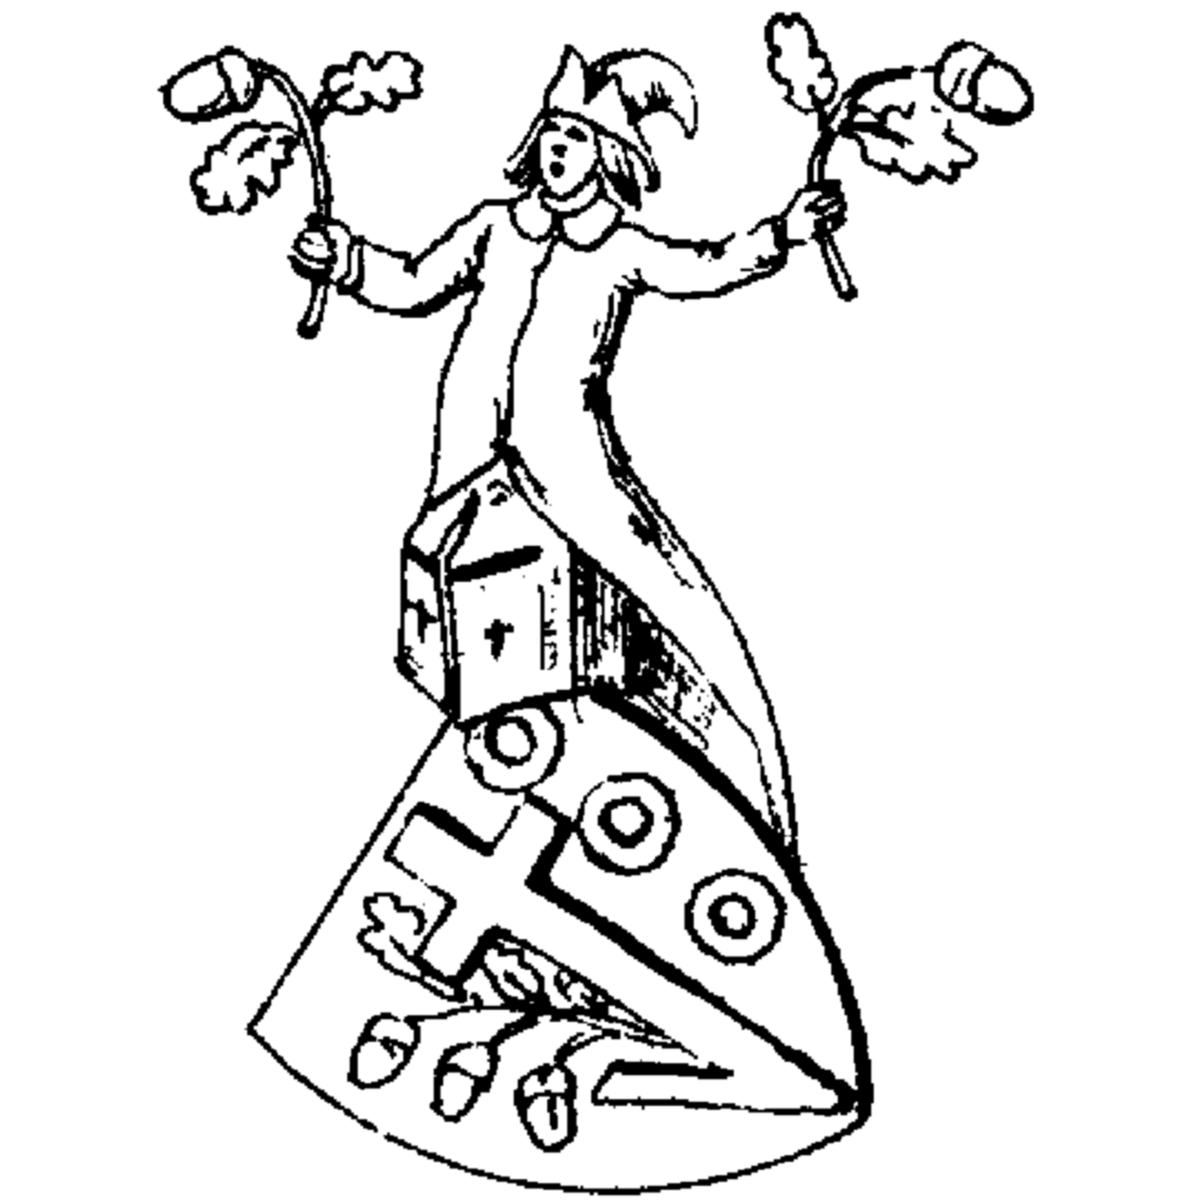 Wappen der Familie Sebastiani